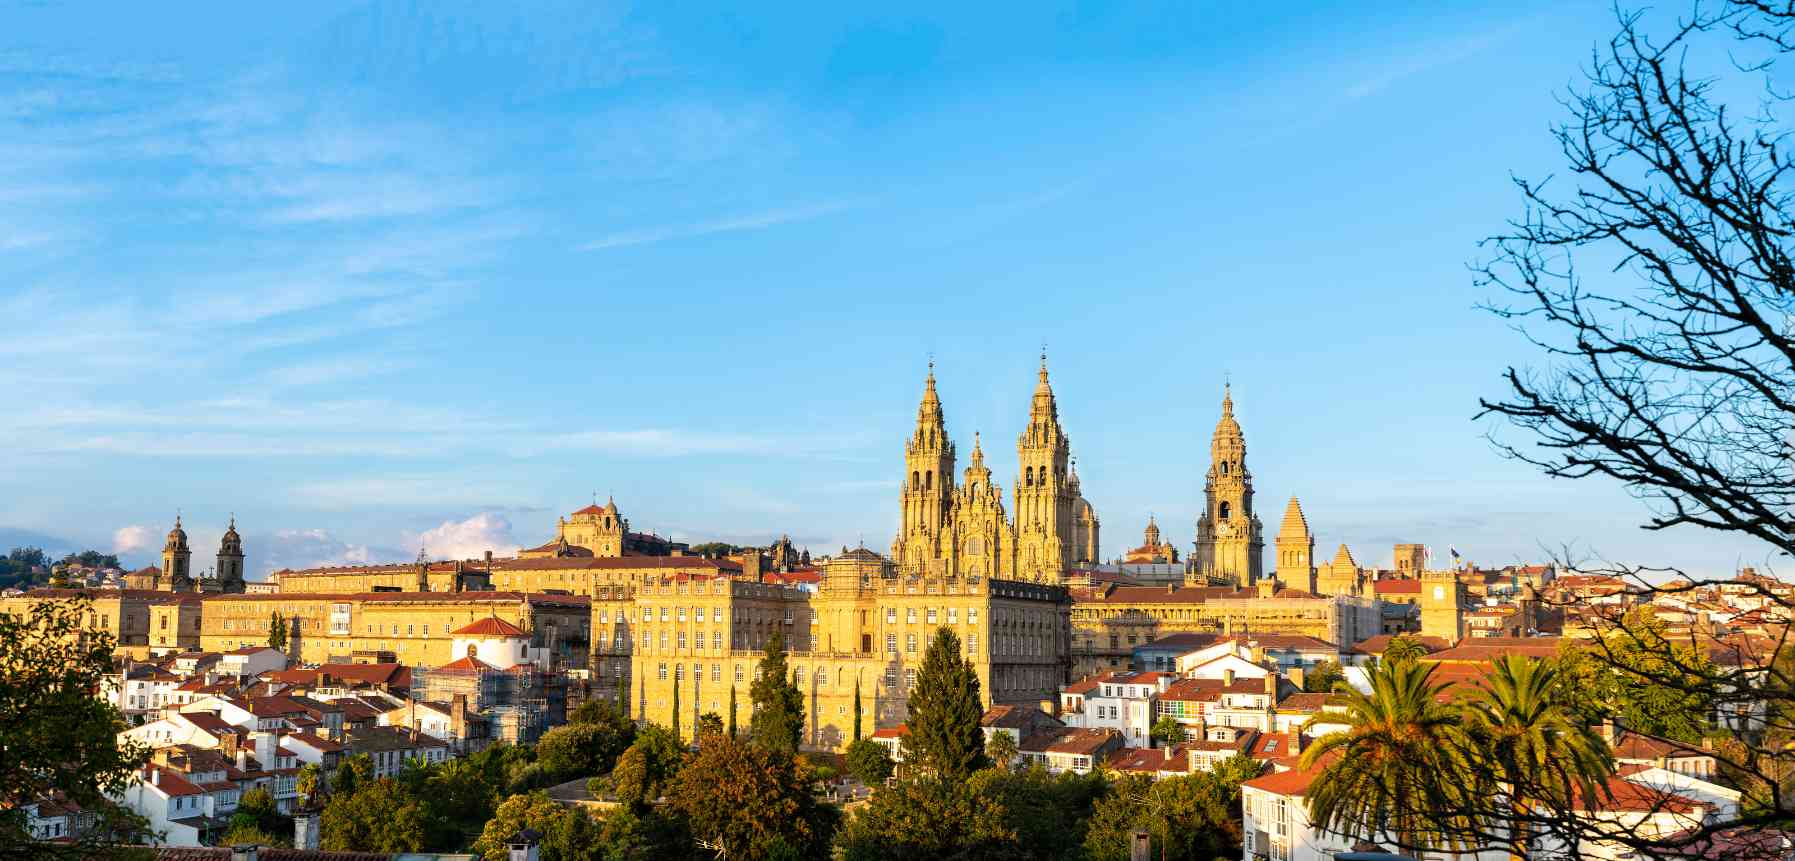 Visit the Cathedral of Santiago de Compostela